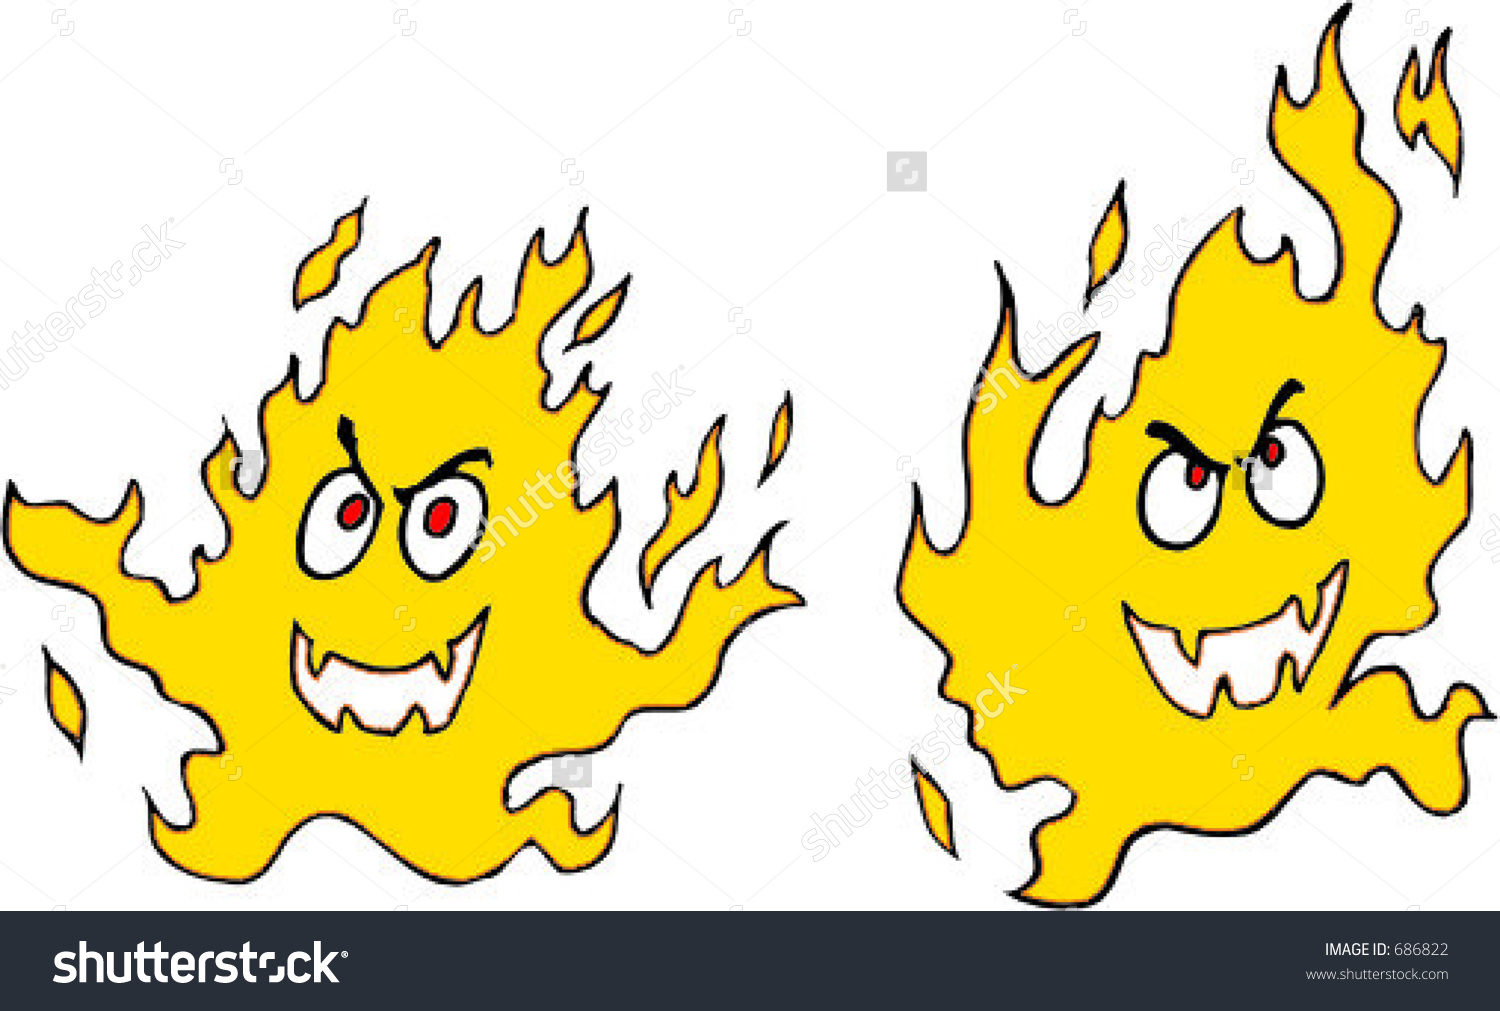 Dancing Flames Stock Vector Illustration 686822 : Shutterstock.